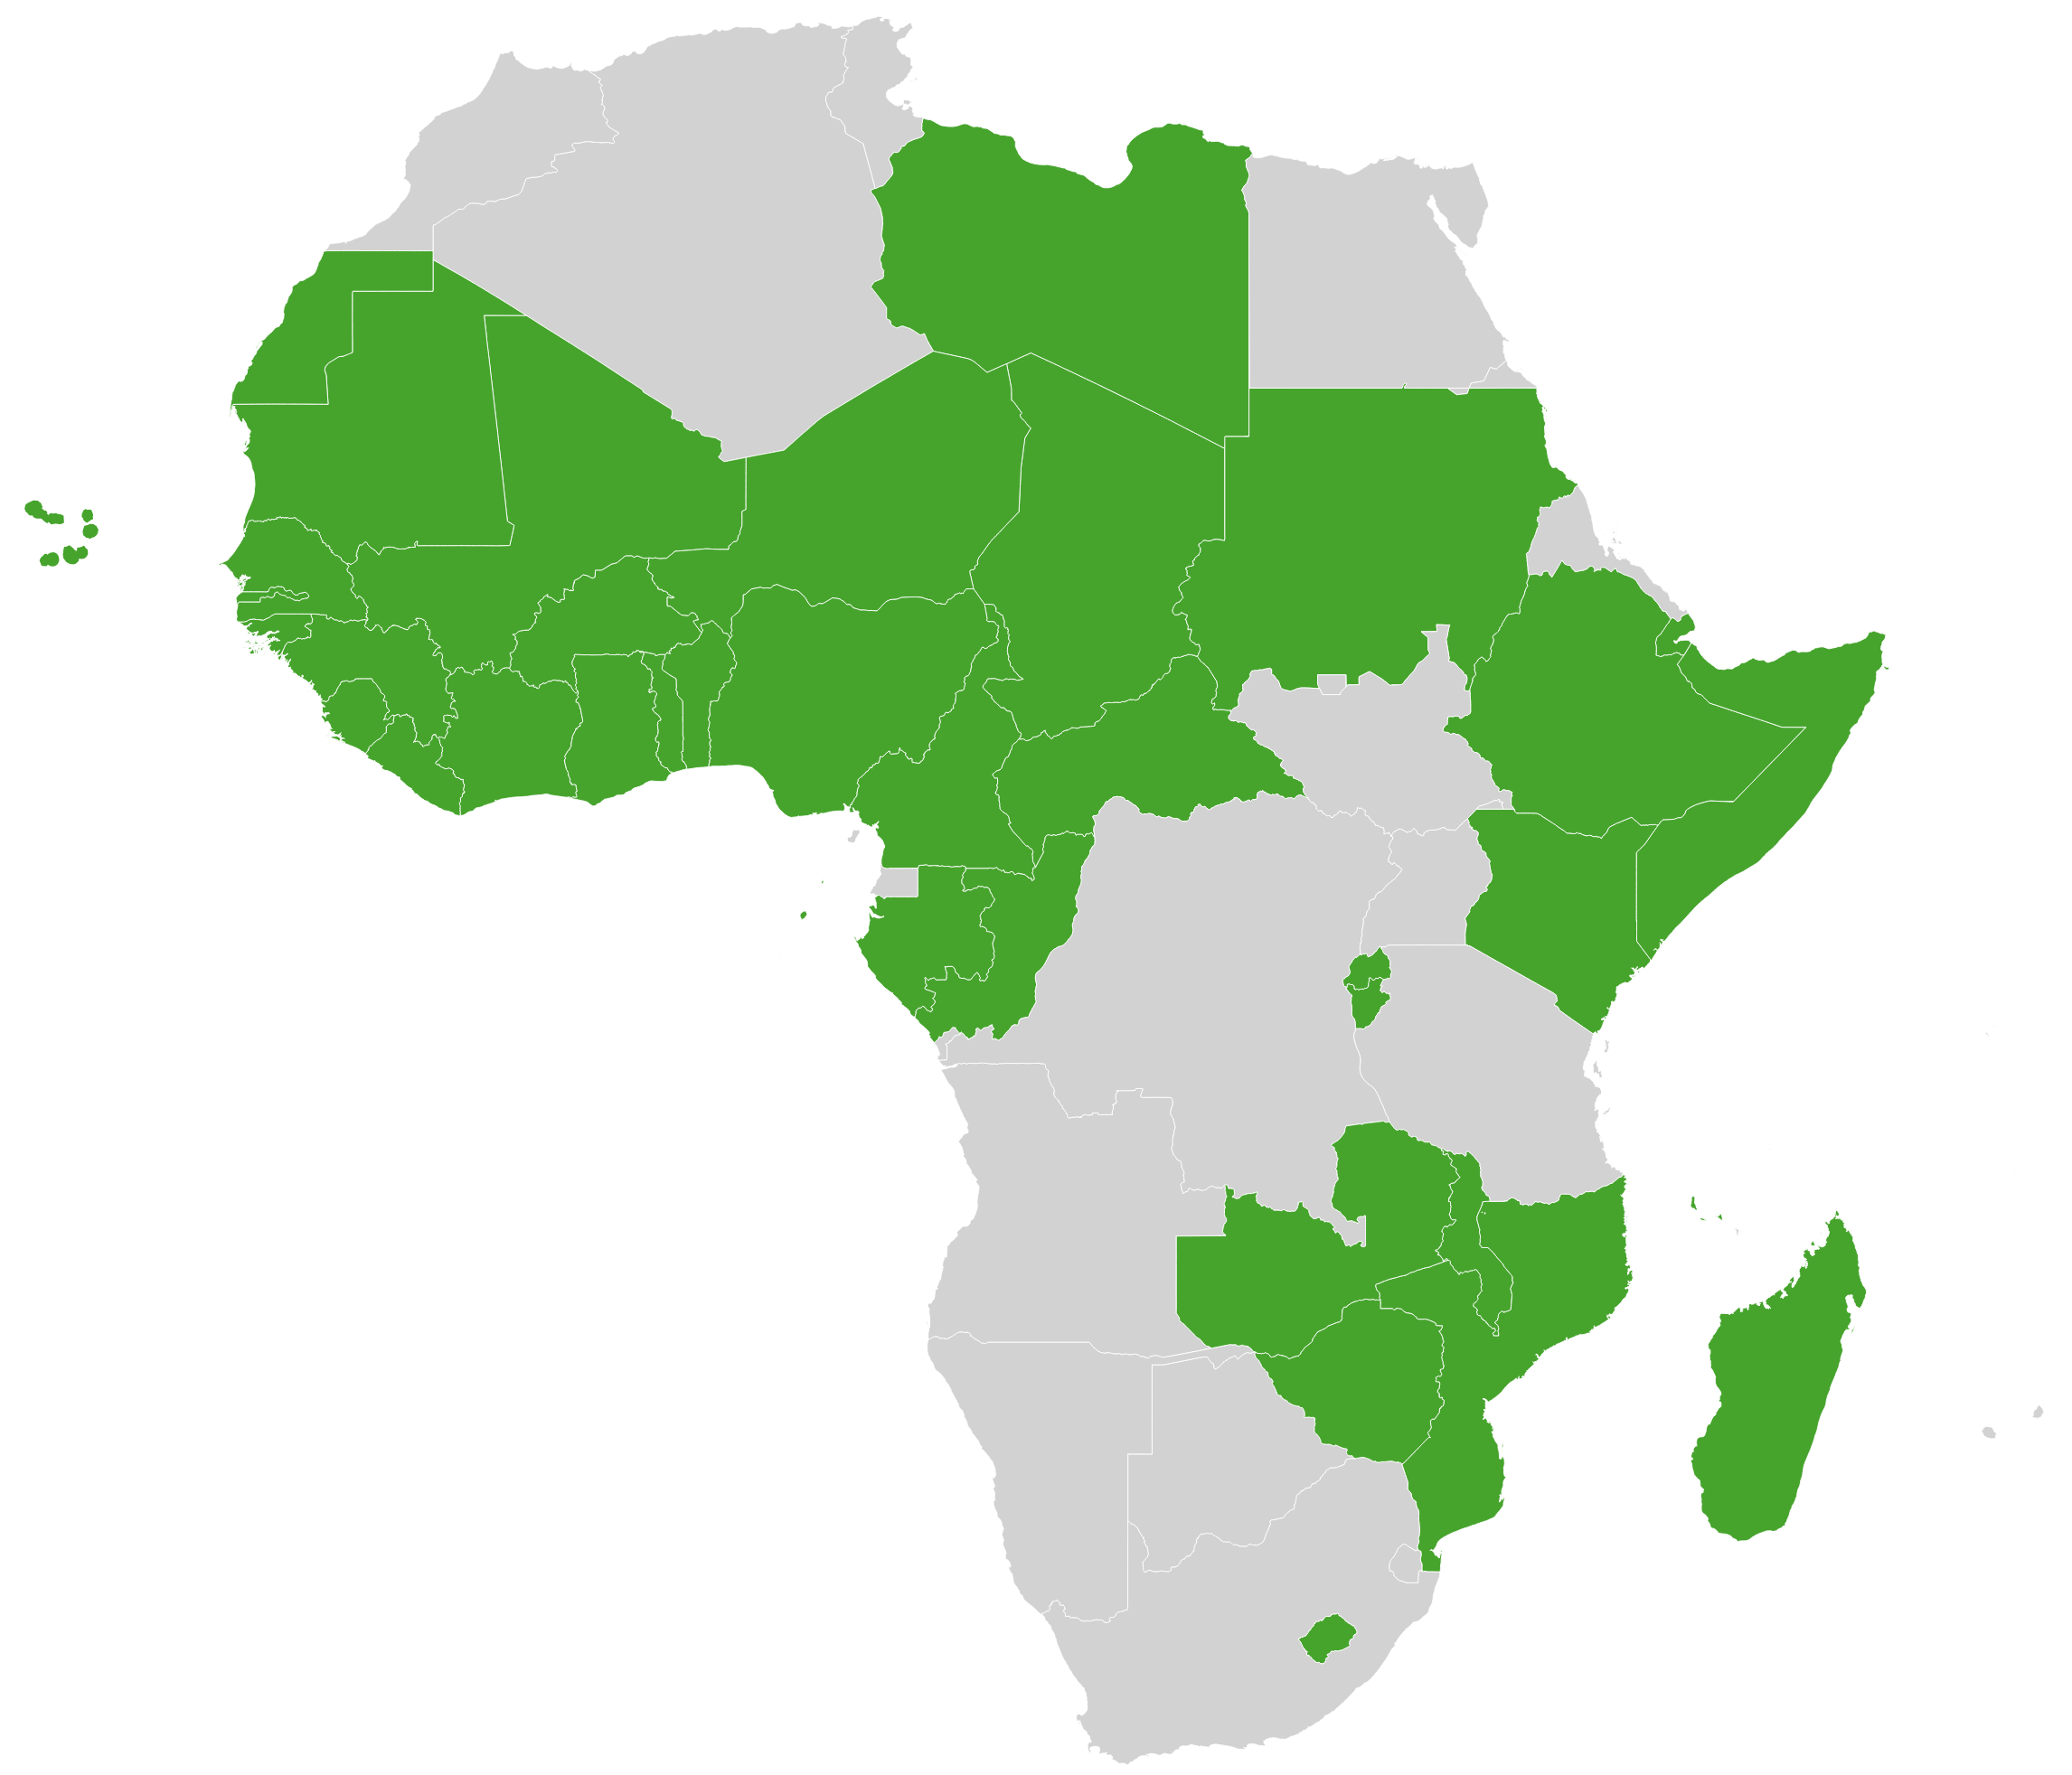 ARC Member States